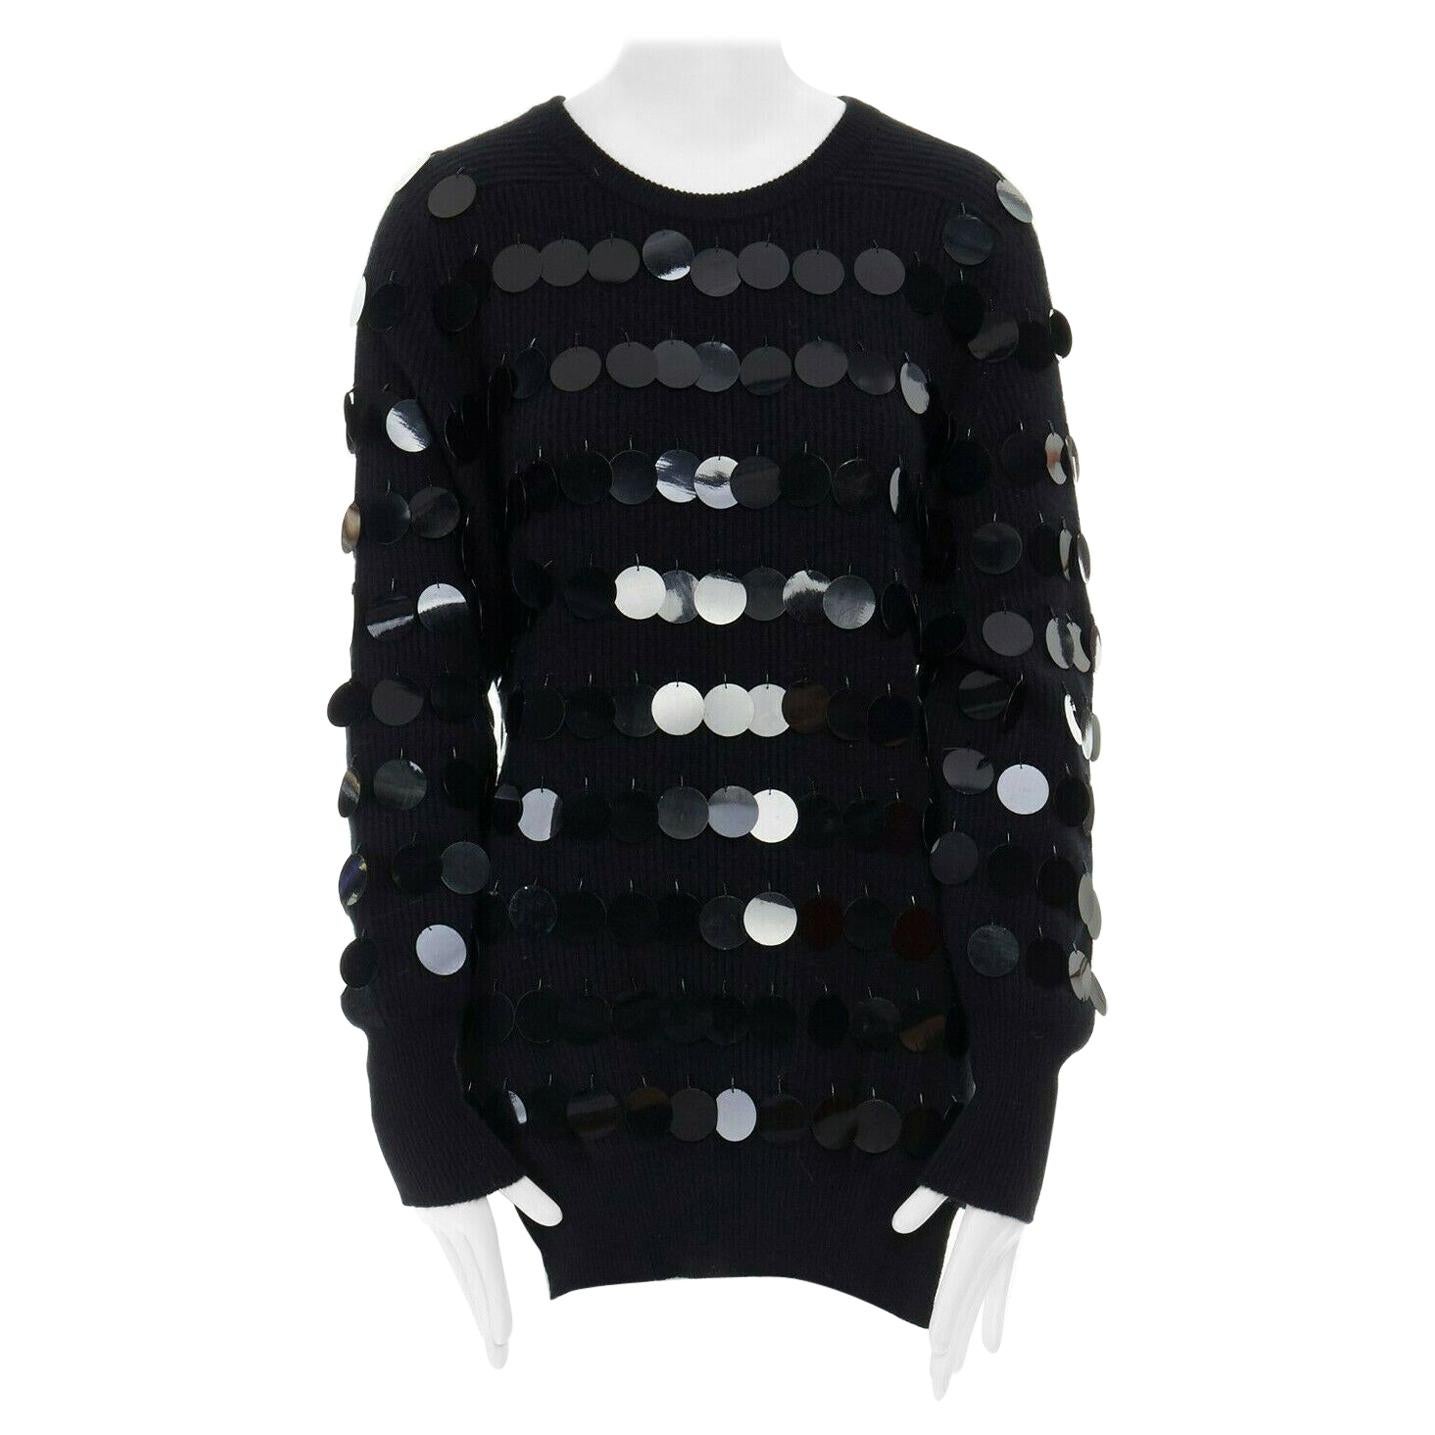 CHRISTOPHER KANE 100% cashmere black bead pailette side slit knit sweater top S